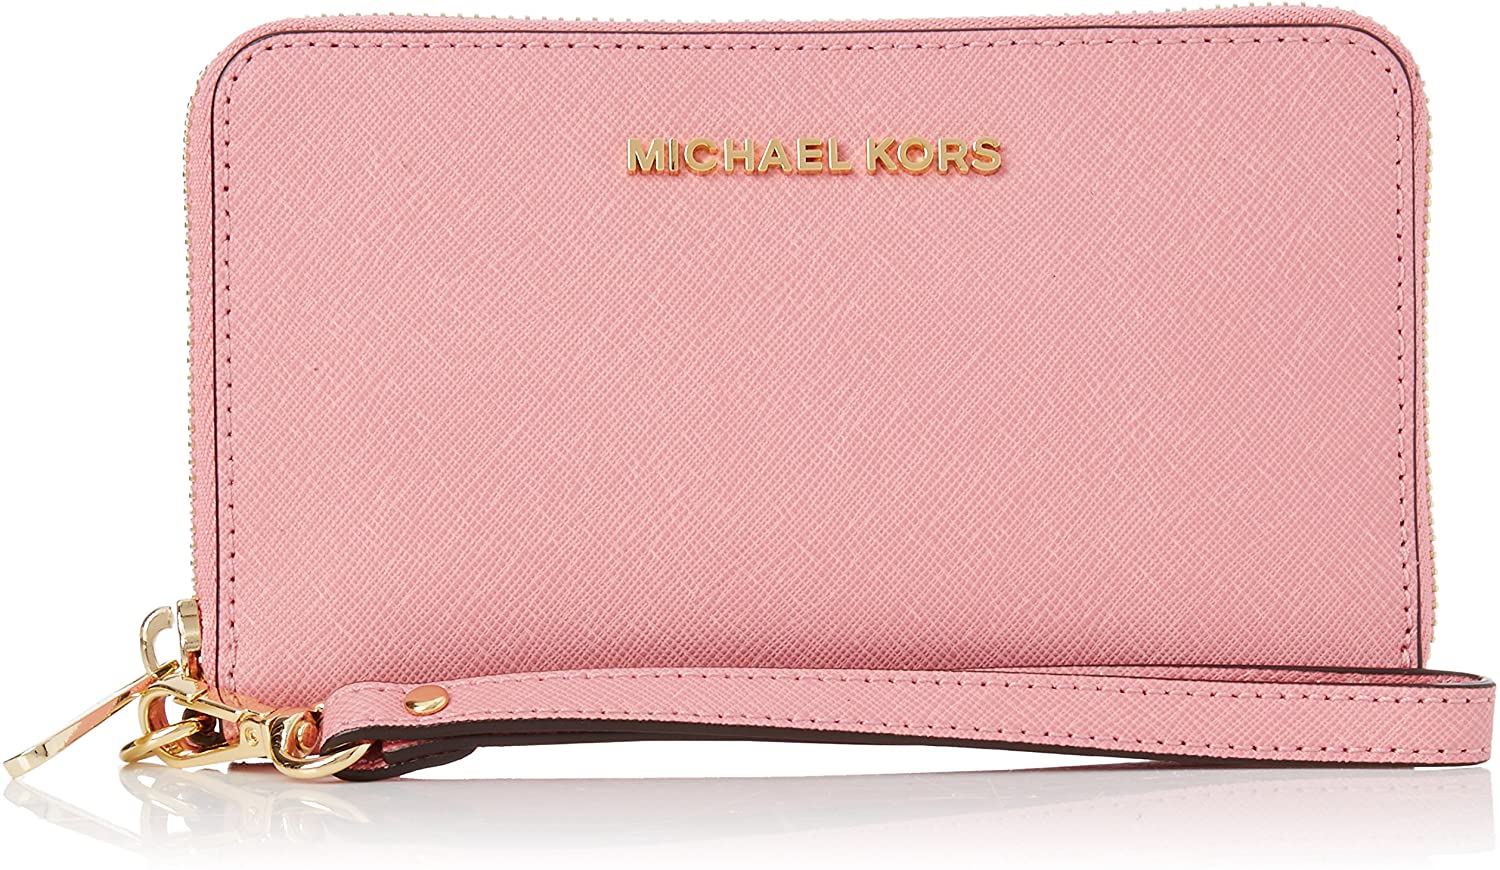 Michael Kors - Authenticated Jet Set Wallet - Pink Plain for Women, Never Worn